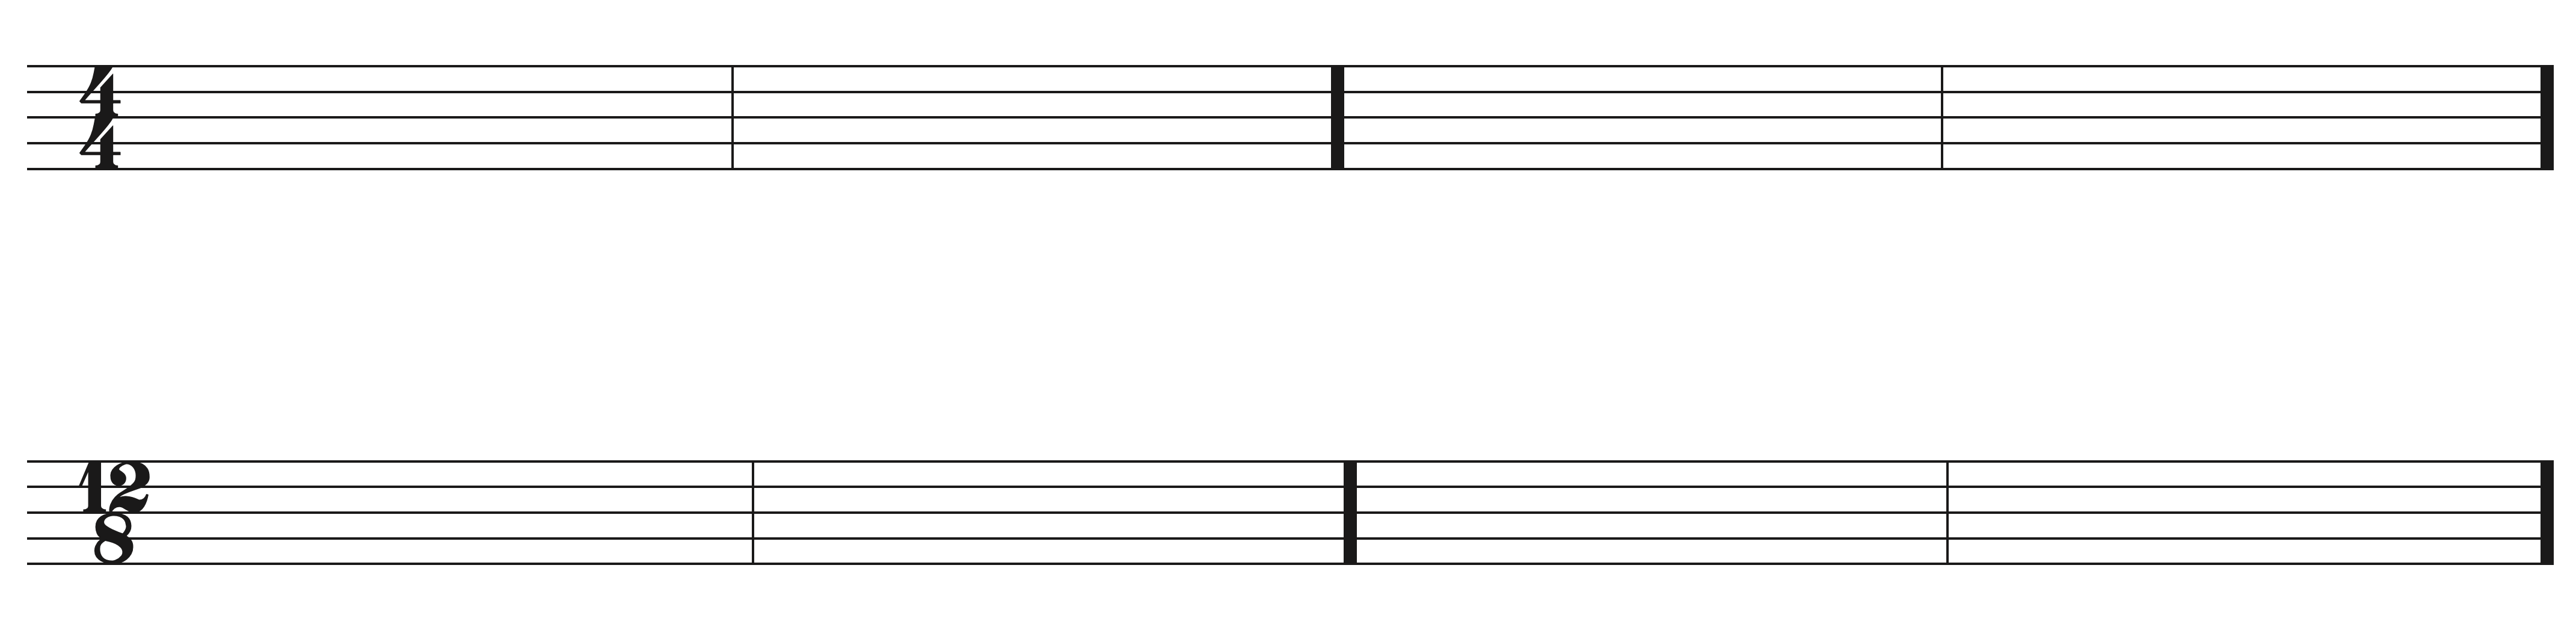 Harmonic Rhythm Aural Training exercise example